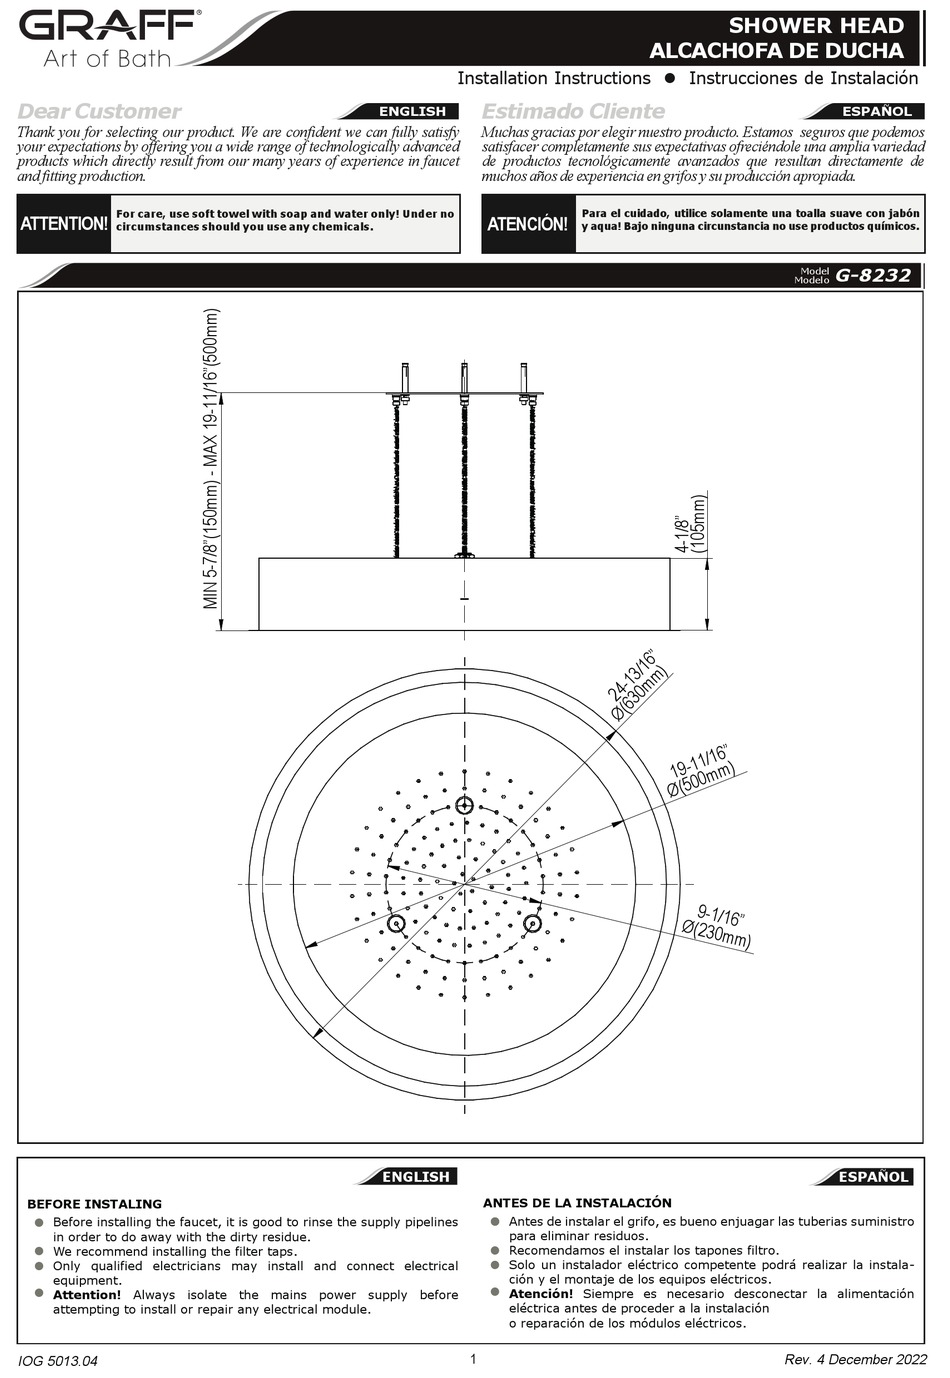 graff-g-8232-installation-instructions-manual-pdf-download-manualslib